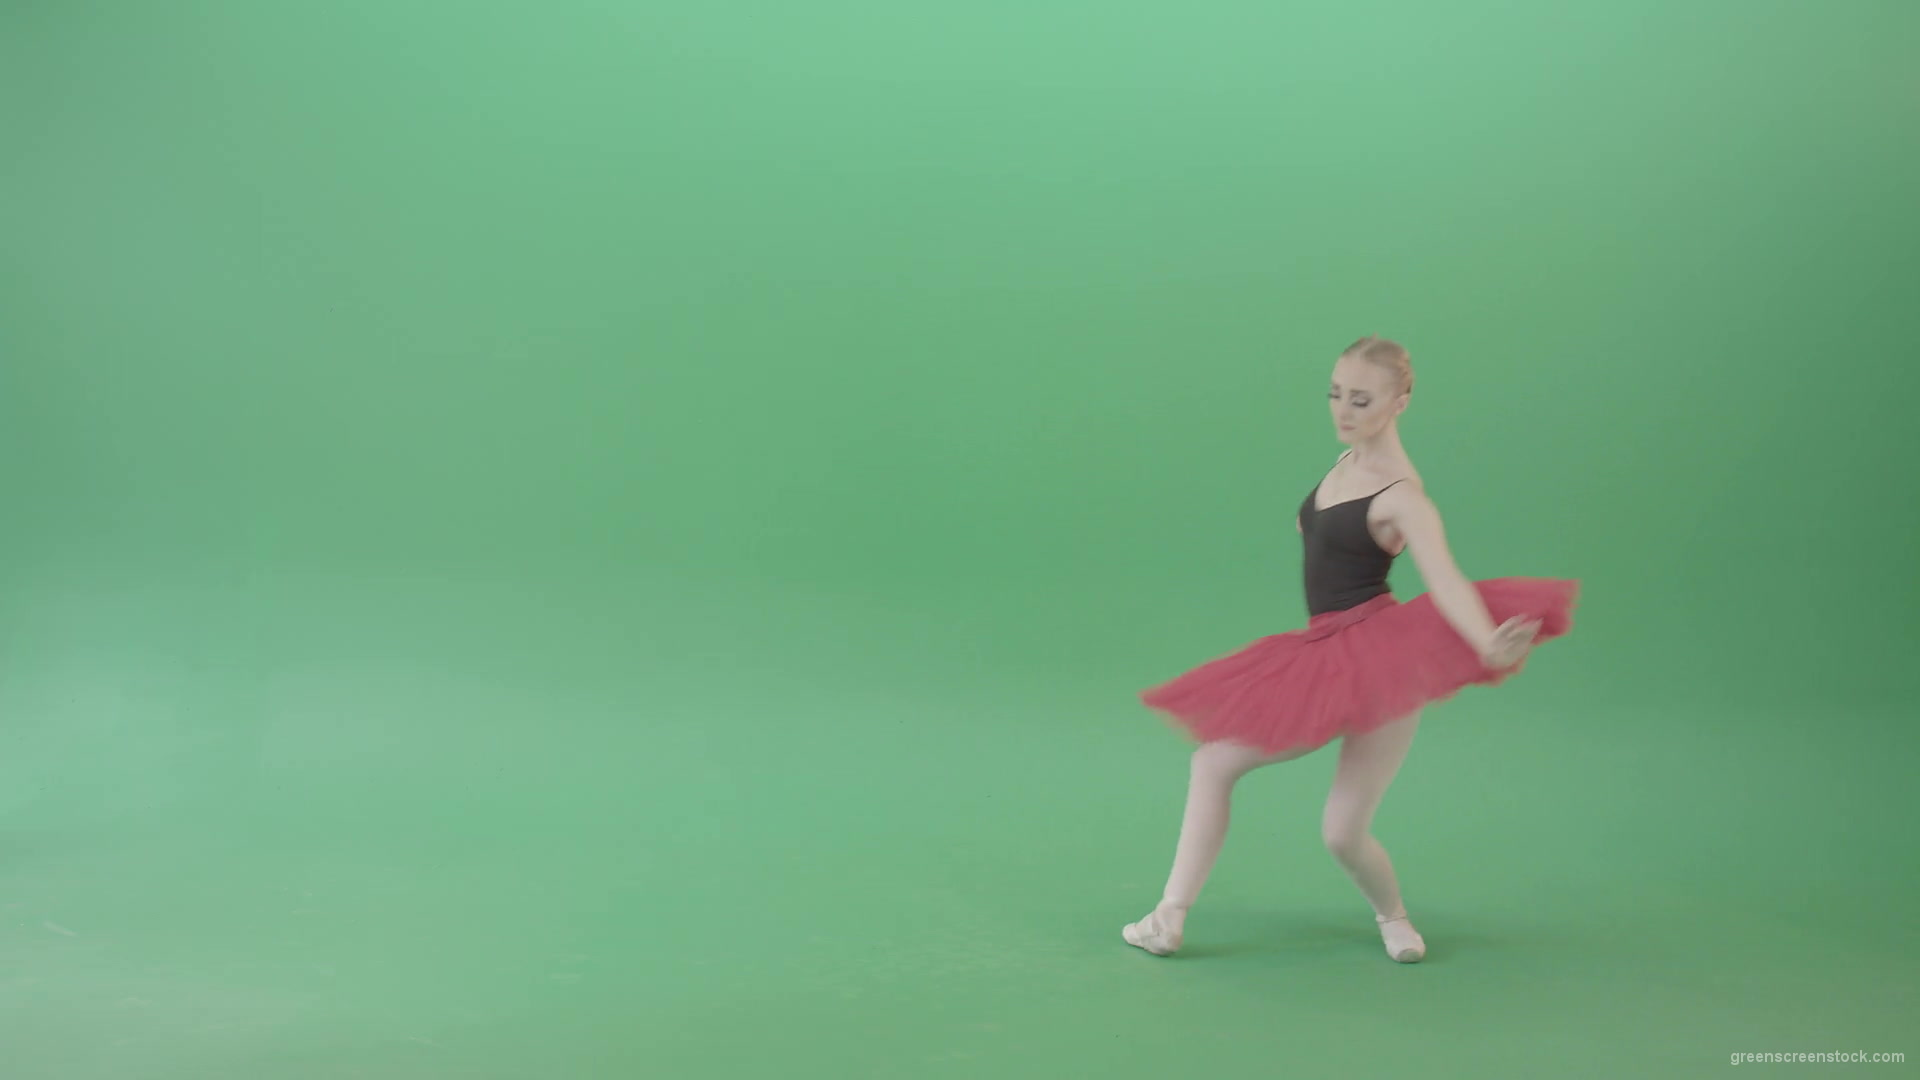 Elegant-elite-moves-by-ballet-dancing-blonde-girl-on-green-screen-4K-Video-Footage-1920_002 Green Screen Stock